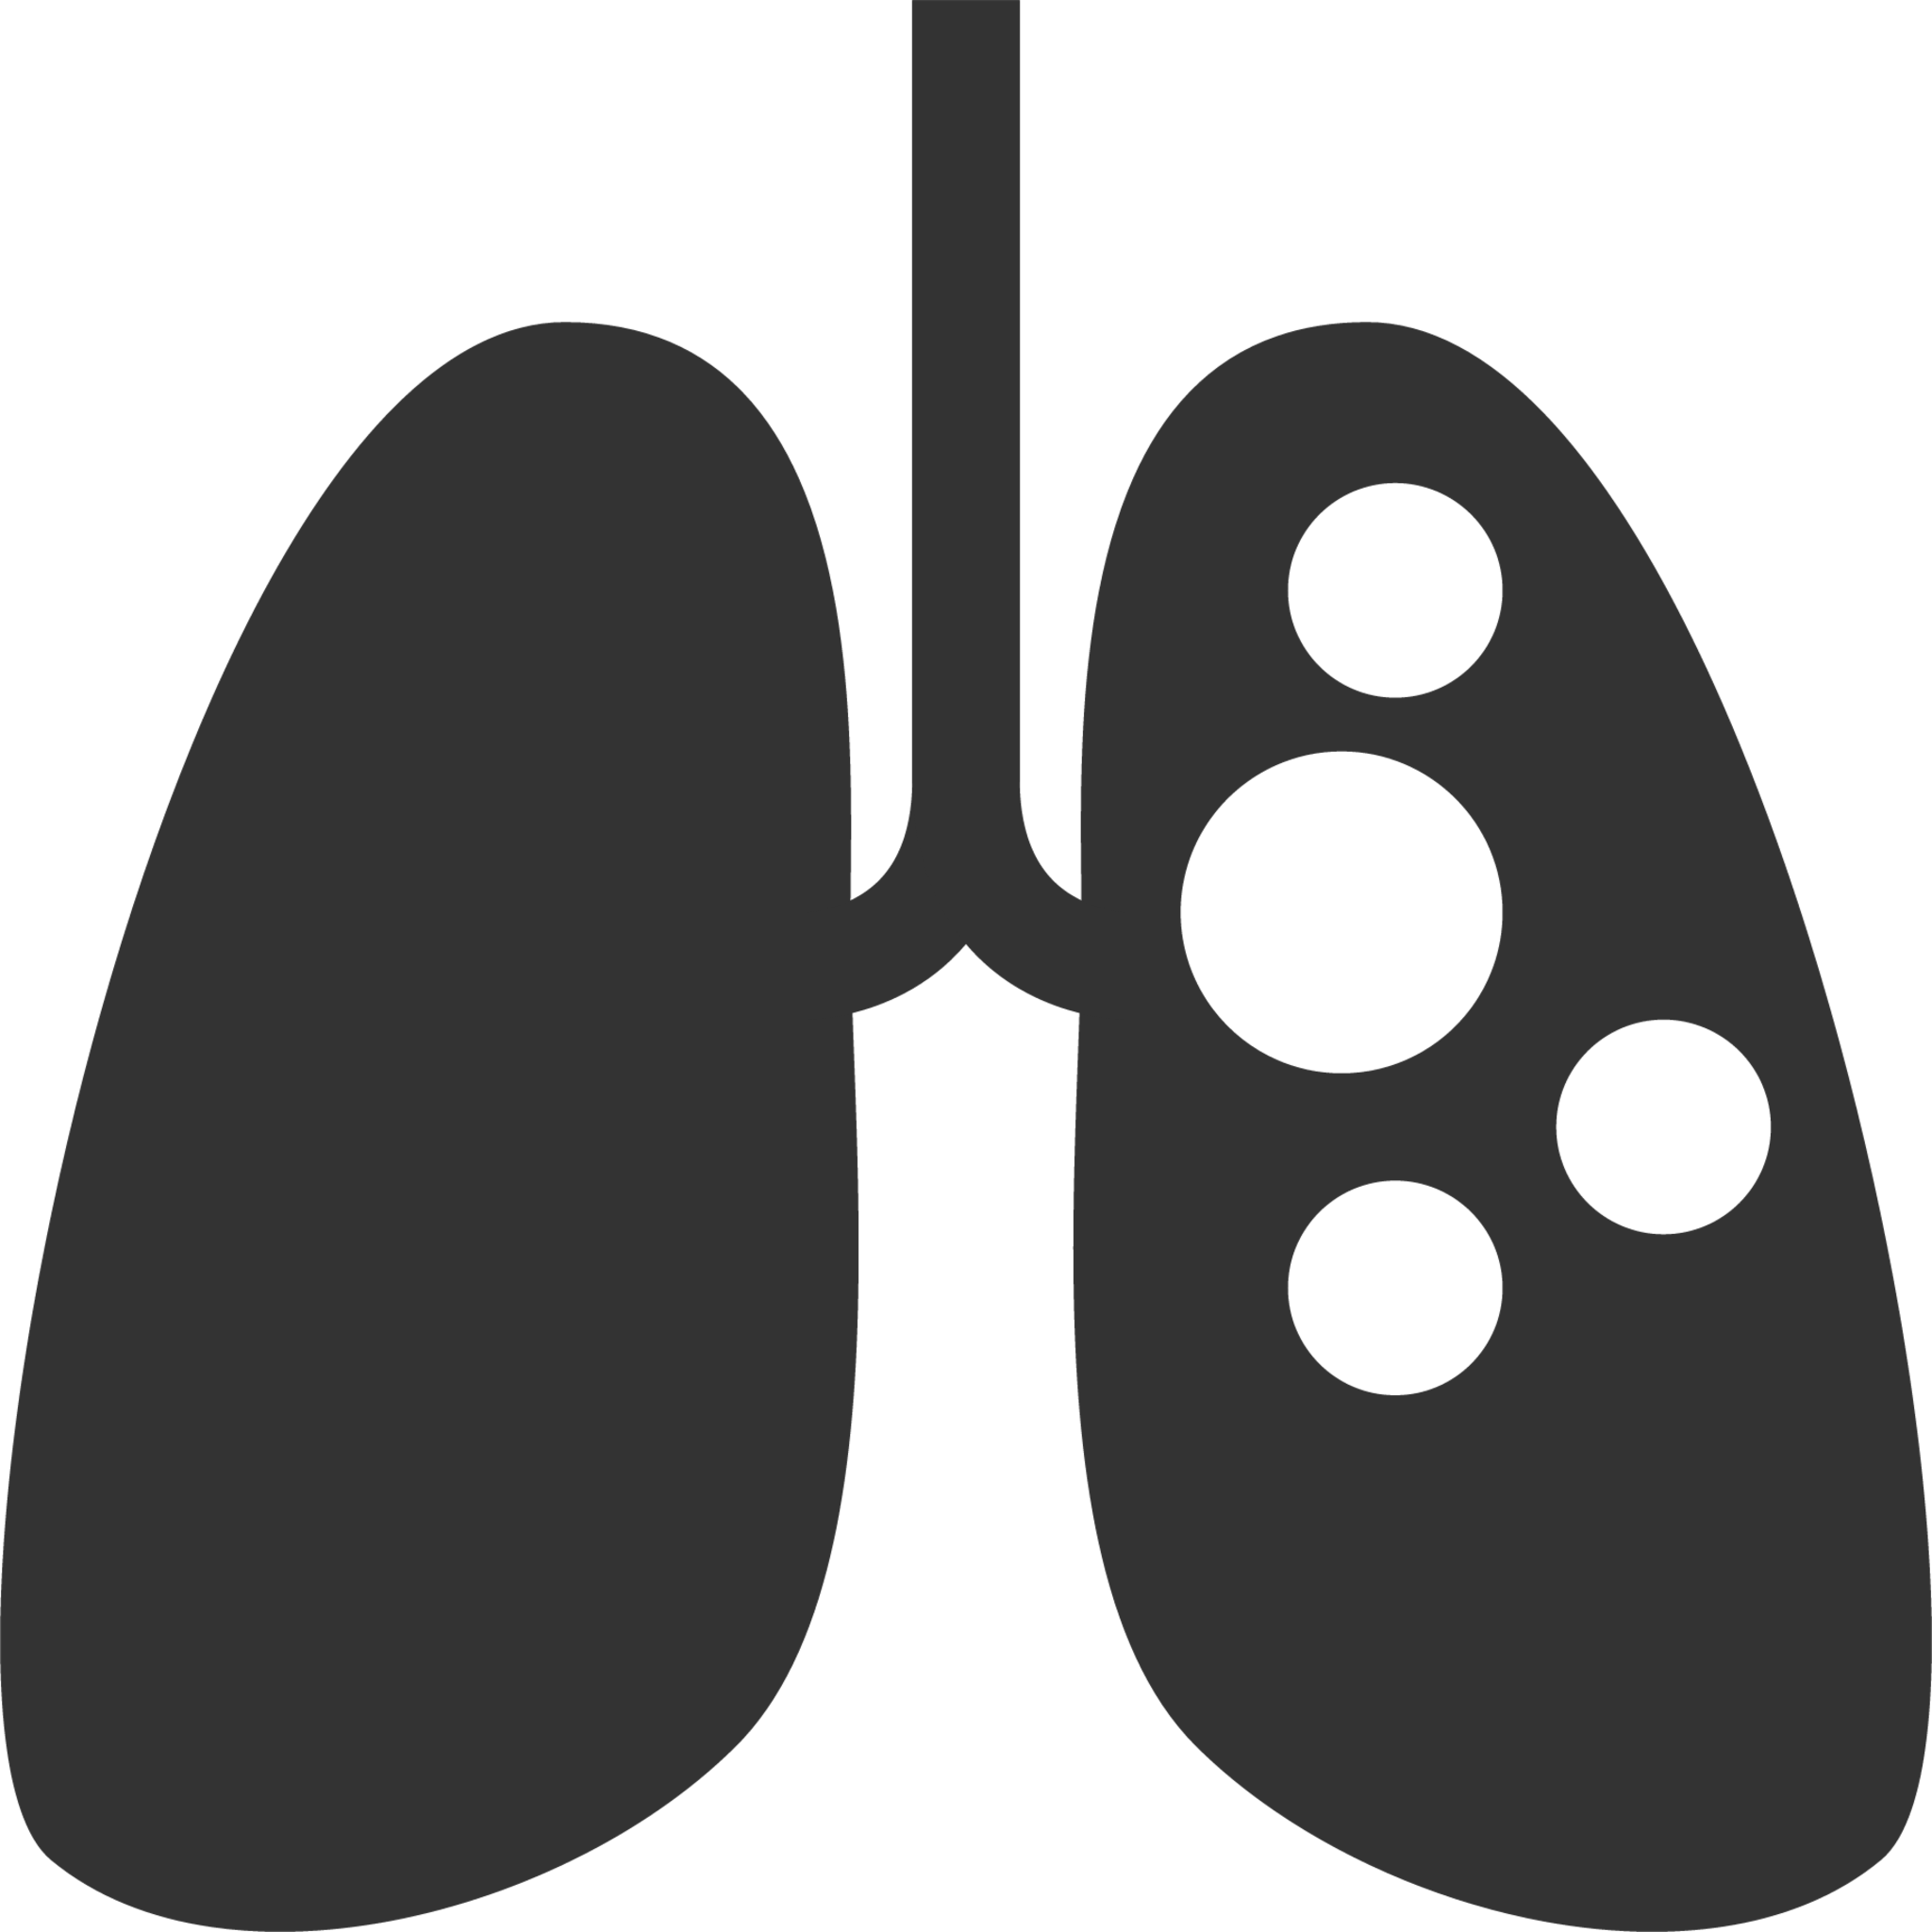 Tuberculosis icon